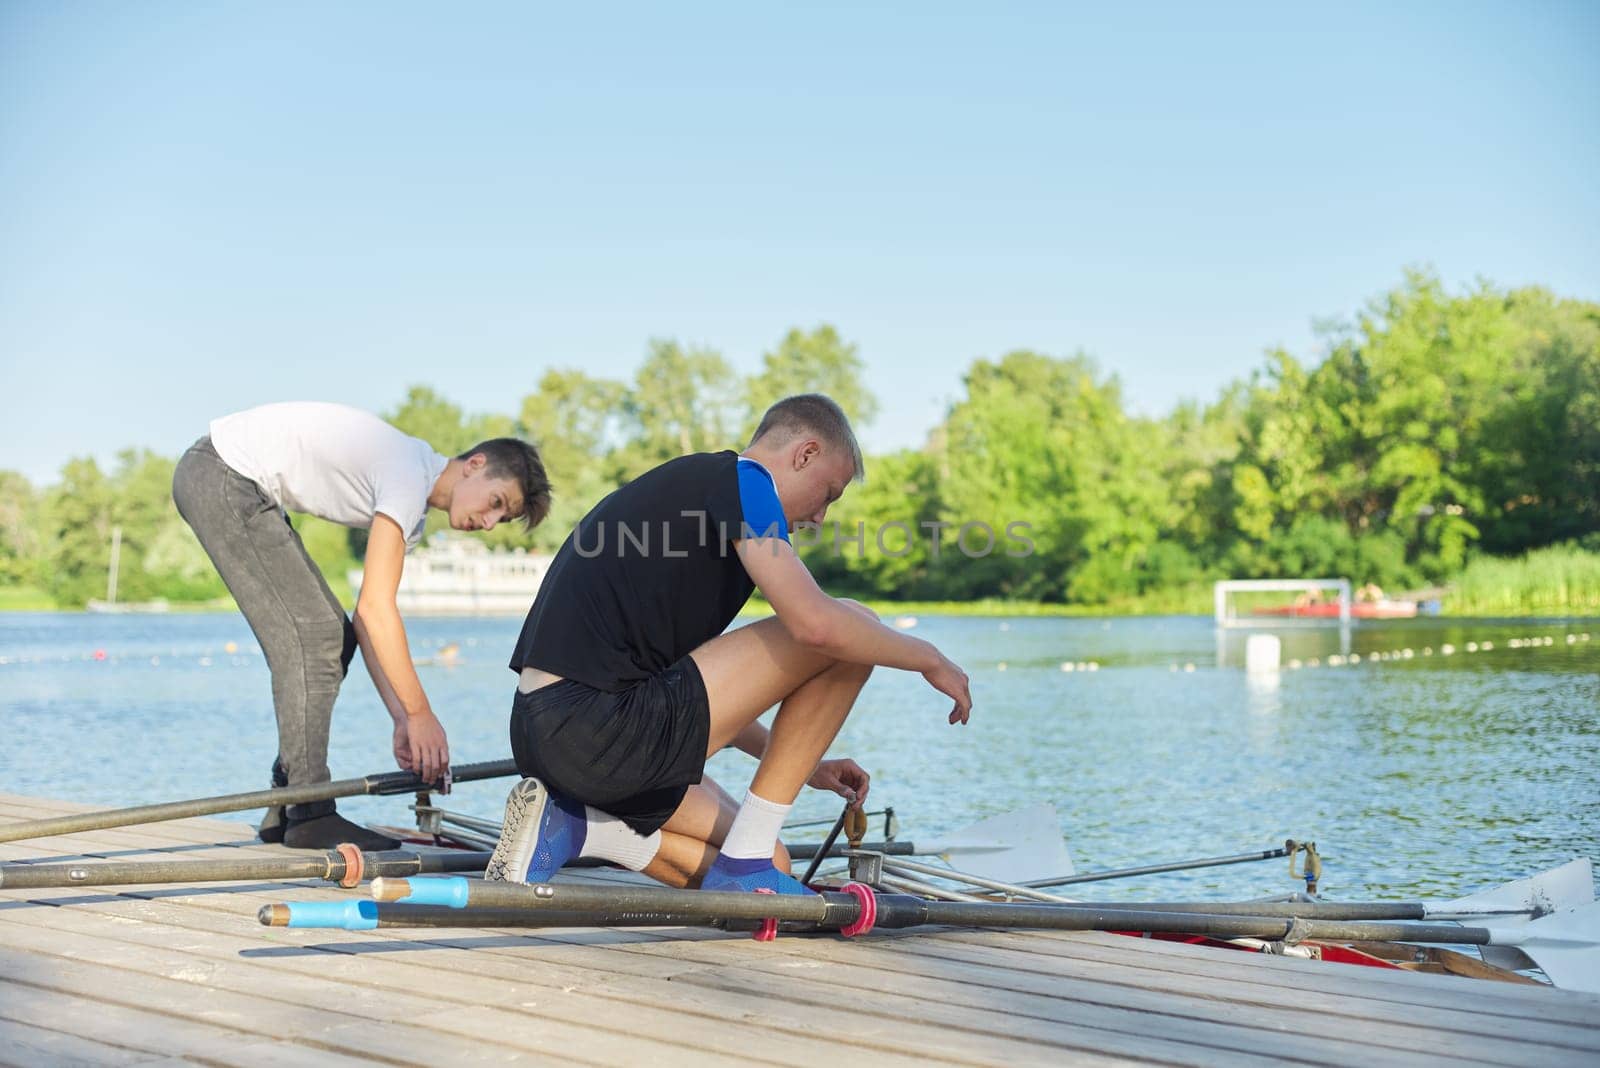 Team of two teenage boys kayaking on river by VH-studio